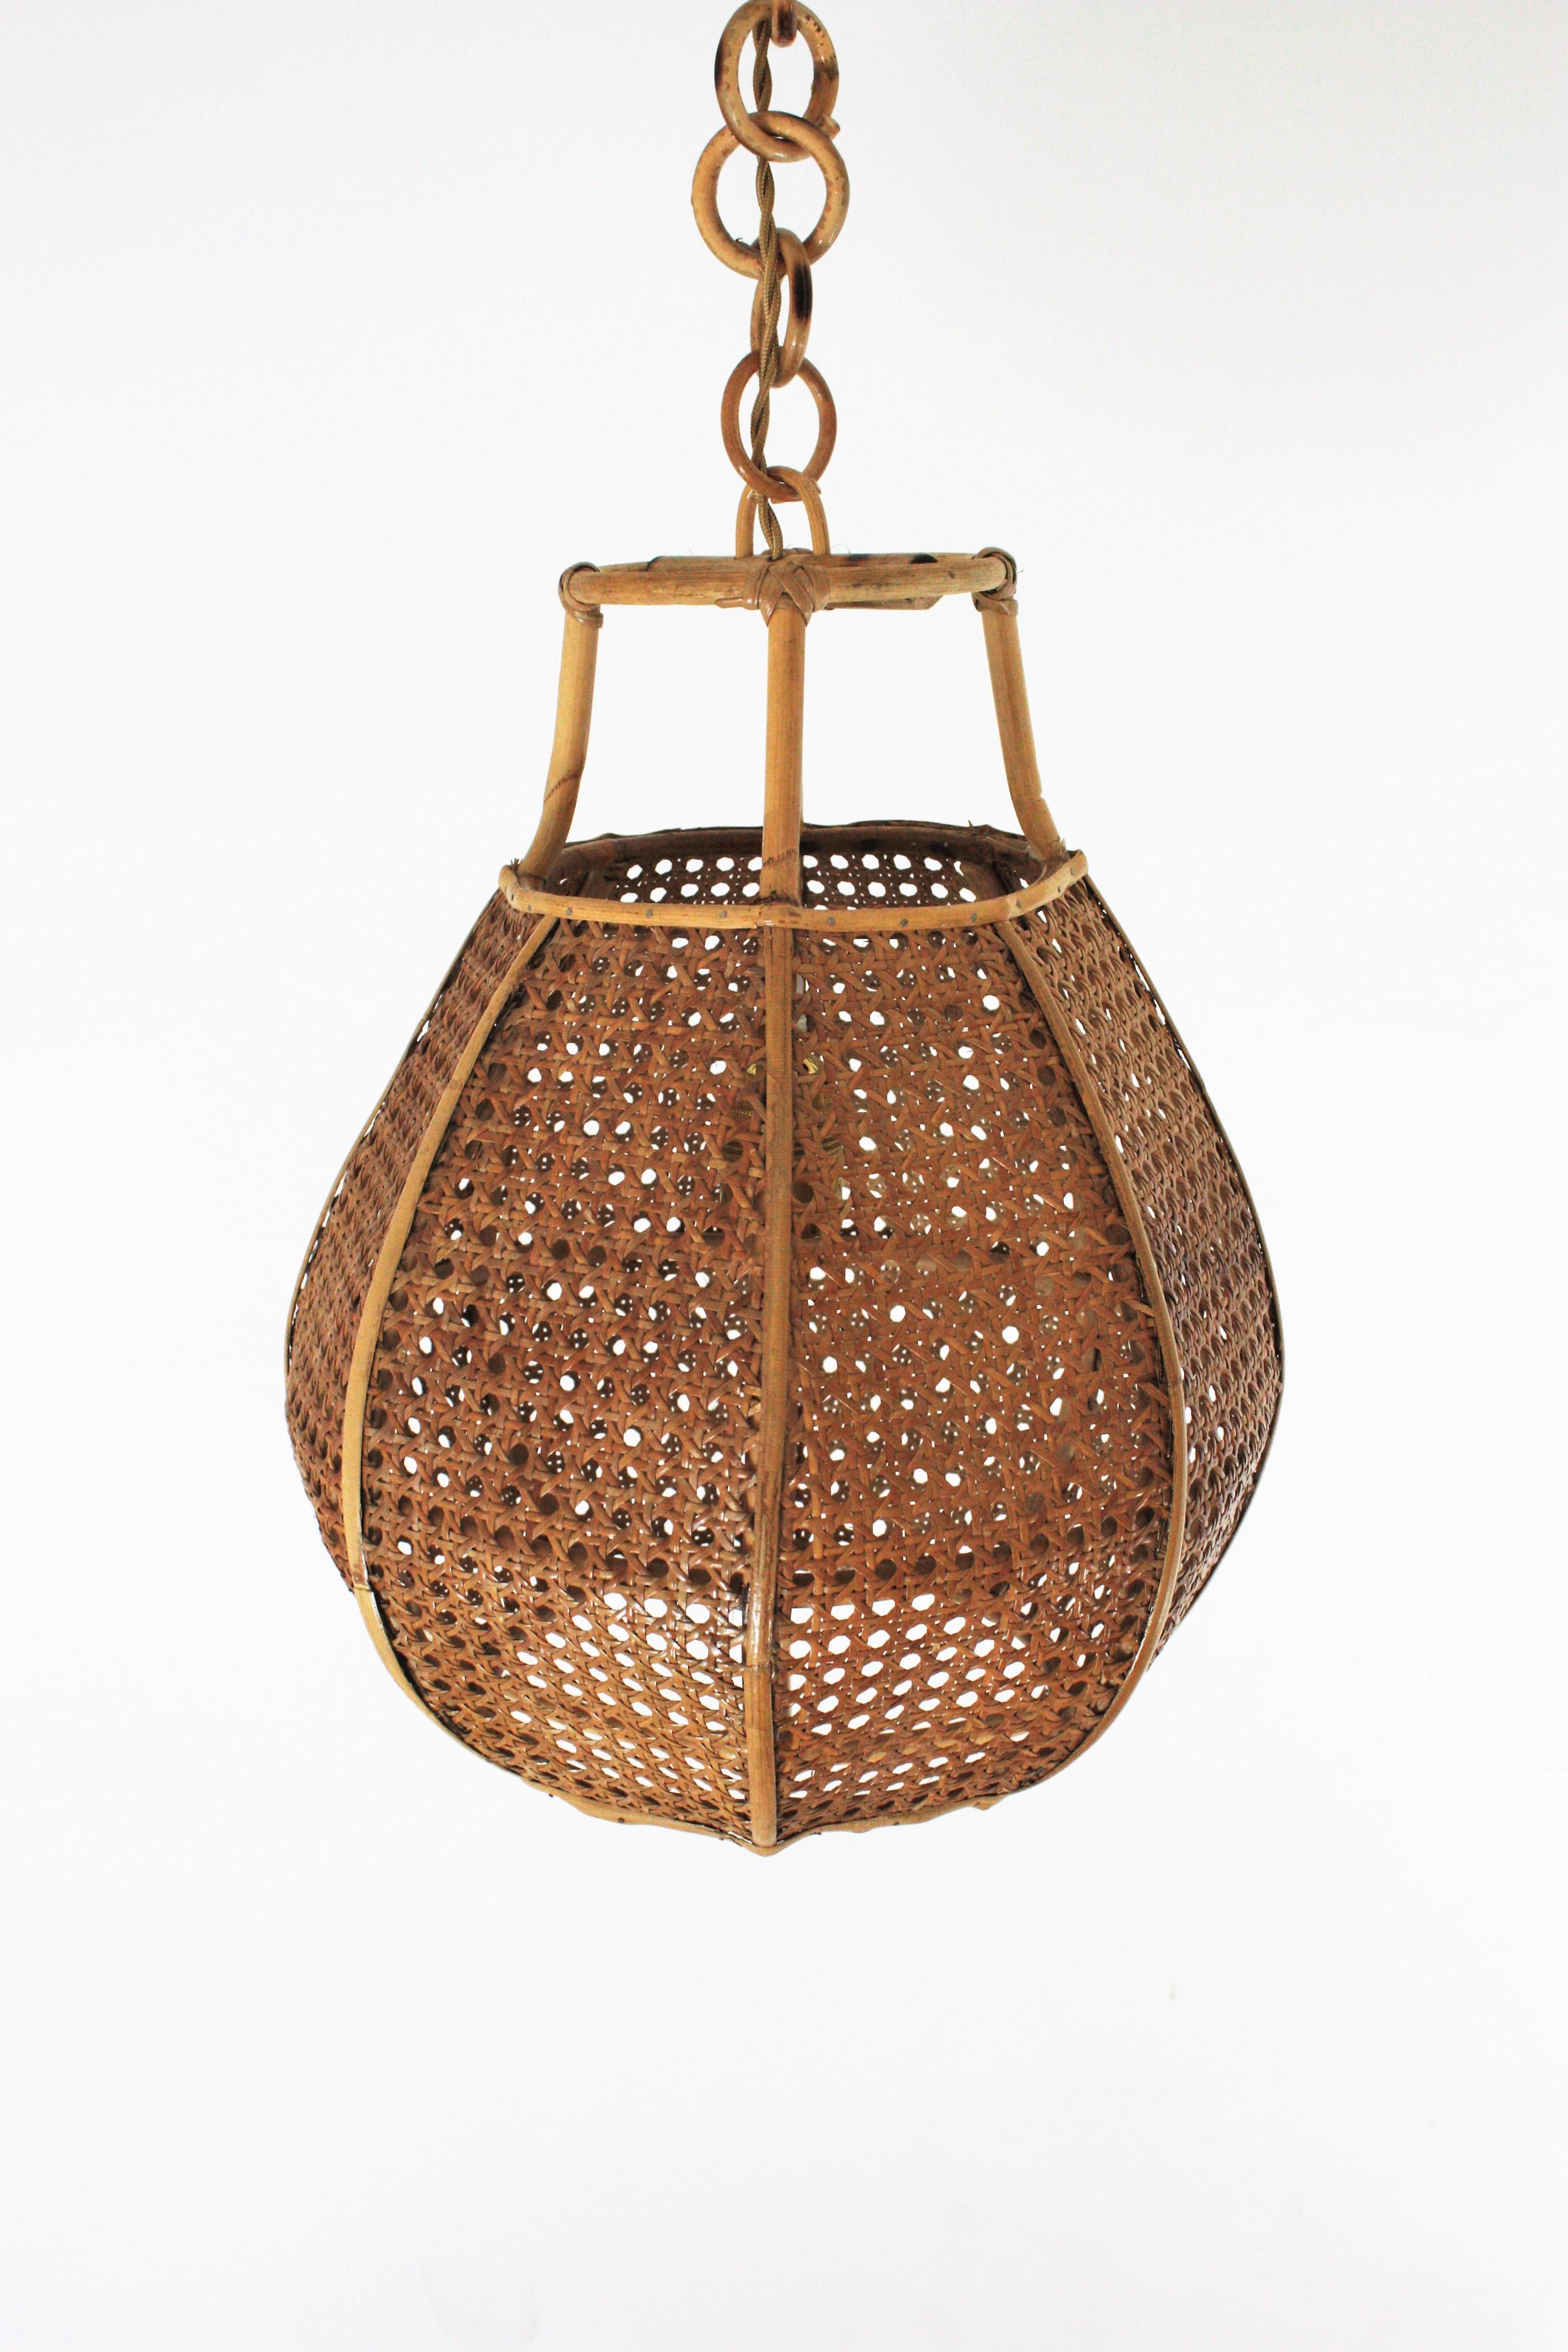 Italian Modernist Wicker Wire Rattan Globe Pendant Hanging Light For Sale 7